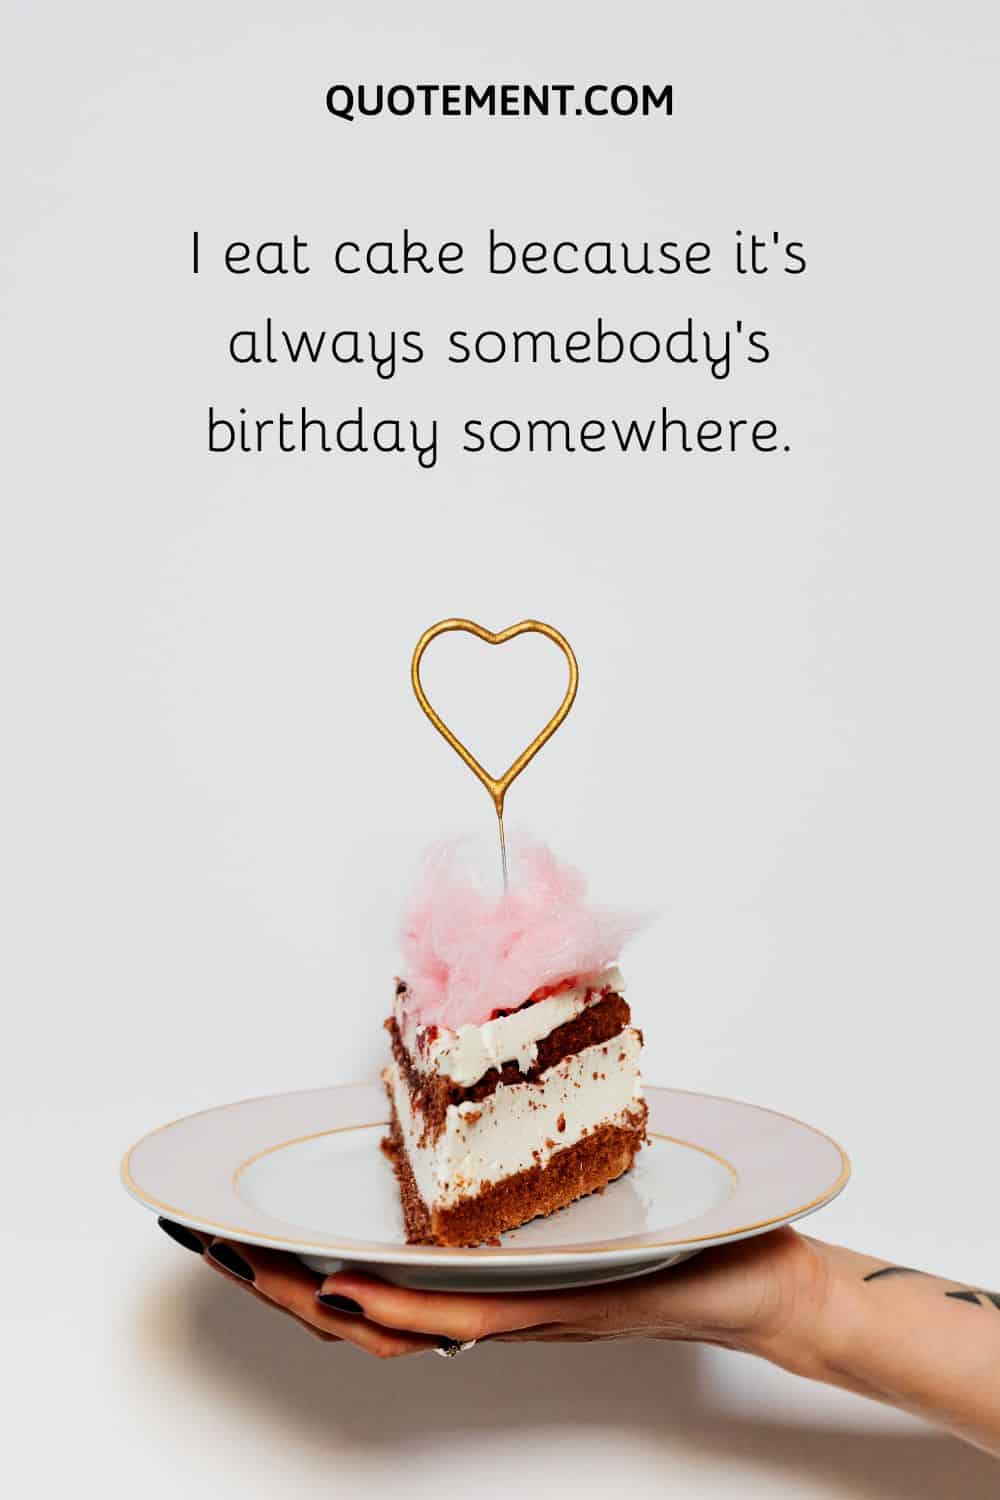 I eat cake because it’s always somebody’s birthday somewhere